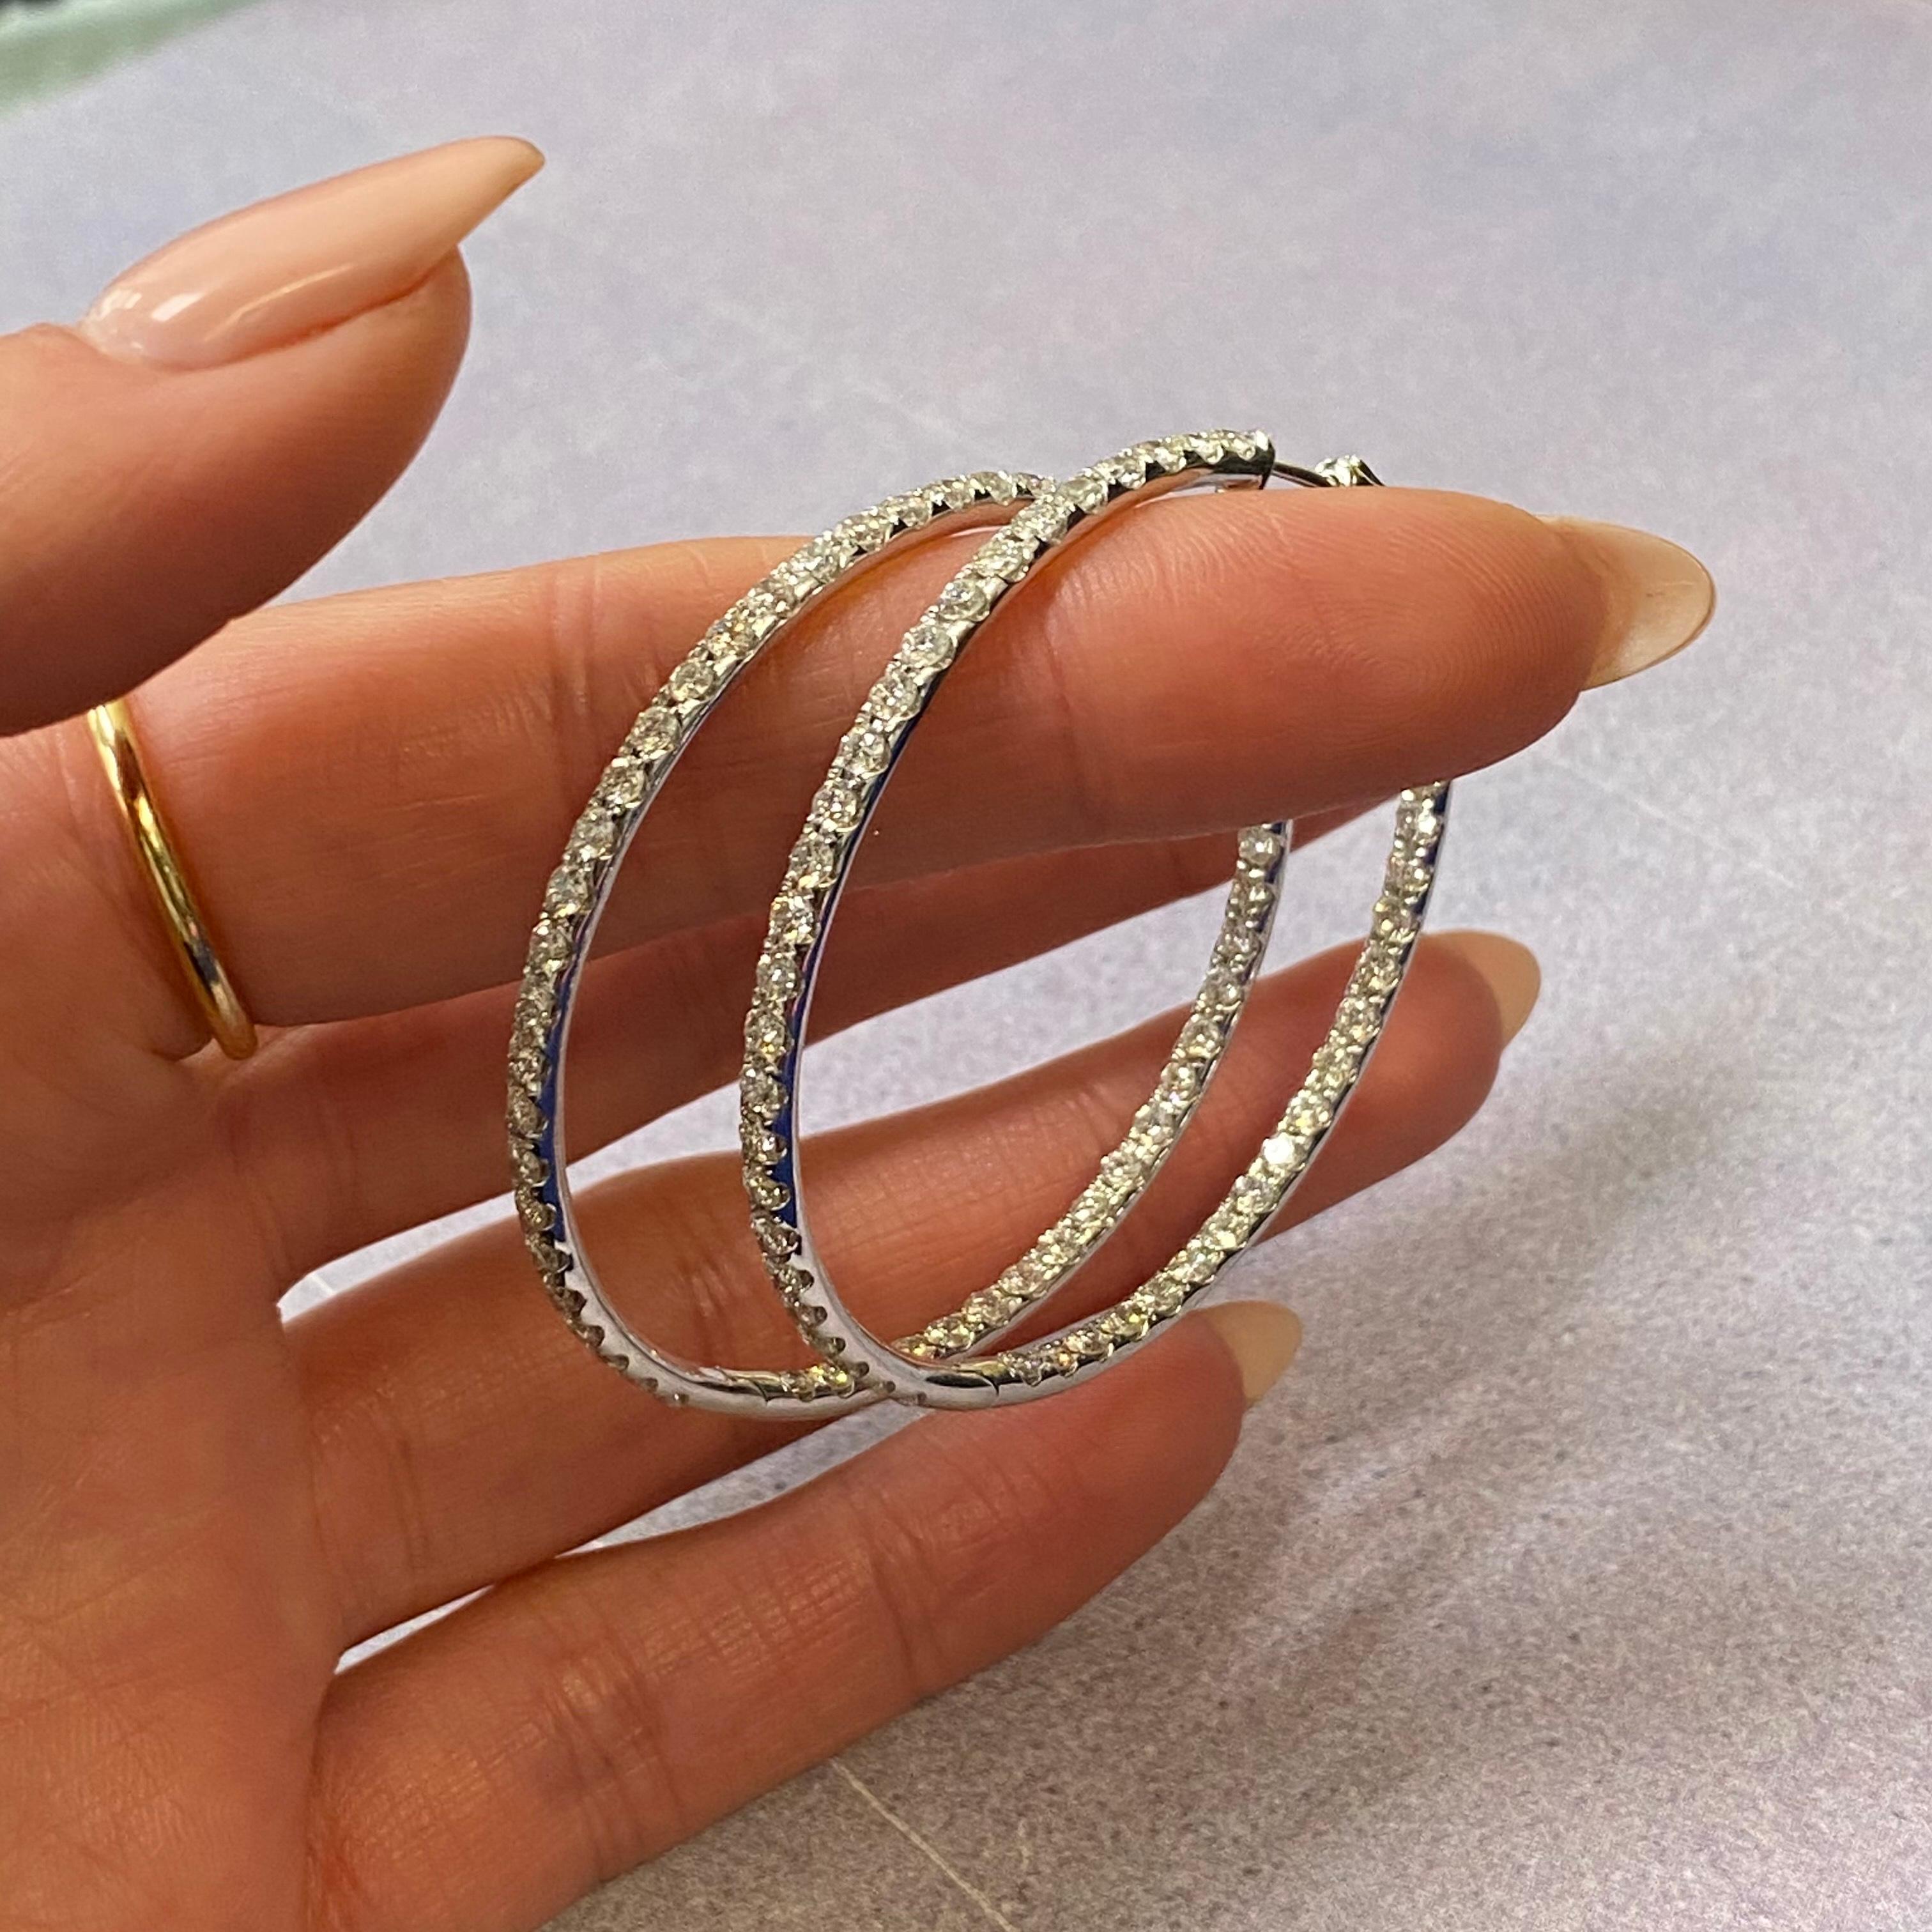 Rachel Koen 18 Karat White Gold Pave Diamond Medium Hoop Earrings 4.60 Carat In New Condition For Sale In New York, NY